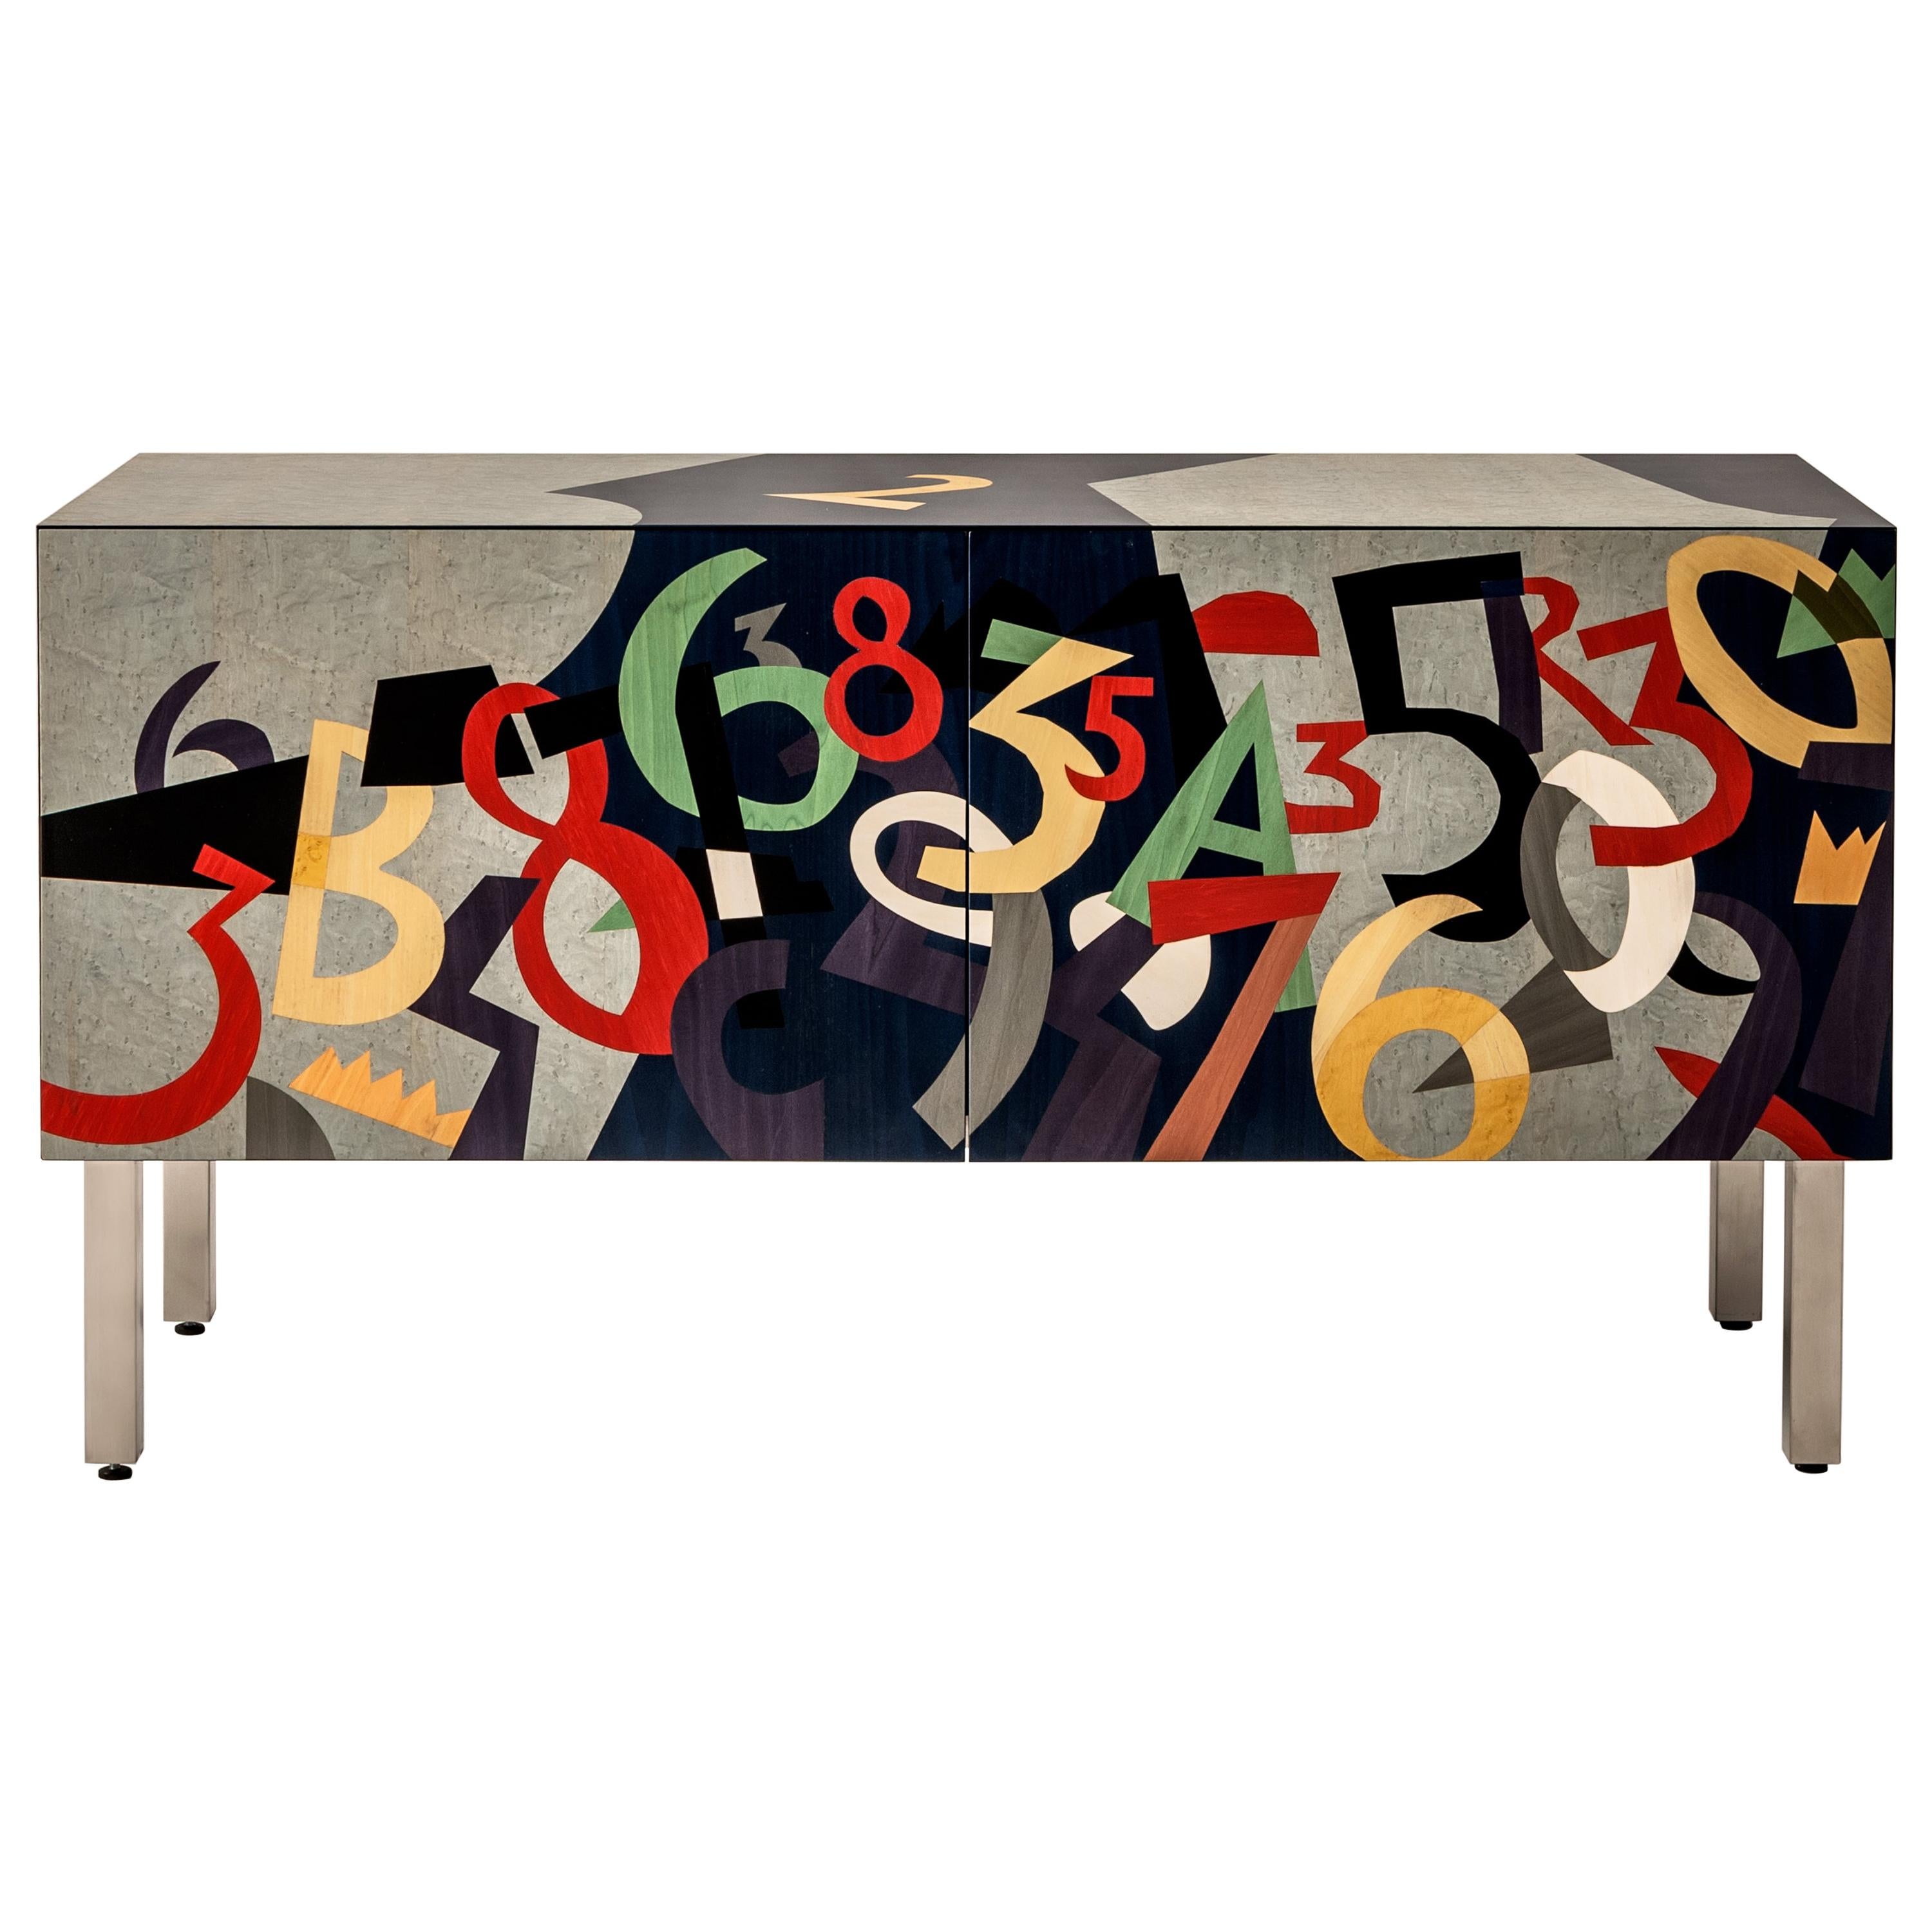 Laurameroni "Numeri" Limited Edition Inlaid Sideboard by Ugo Nespolo For Sale